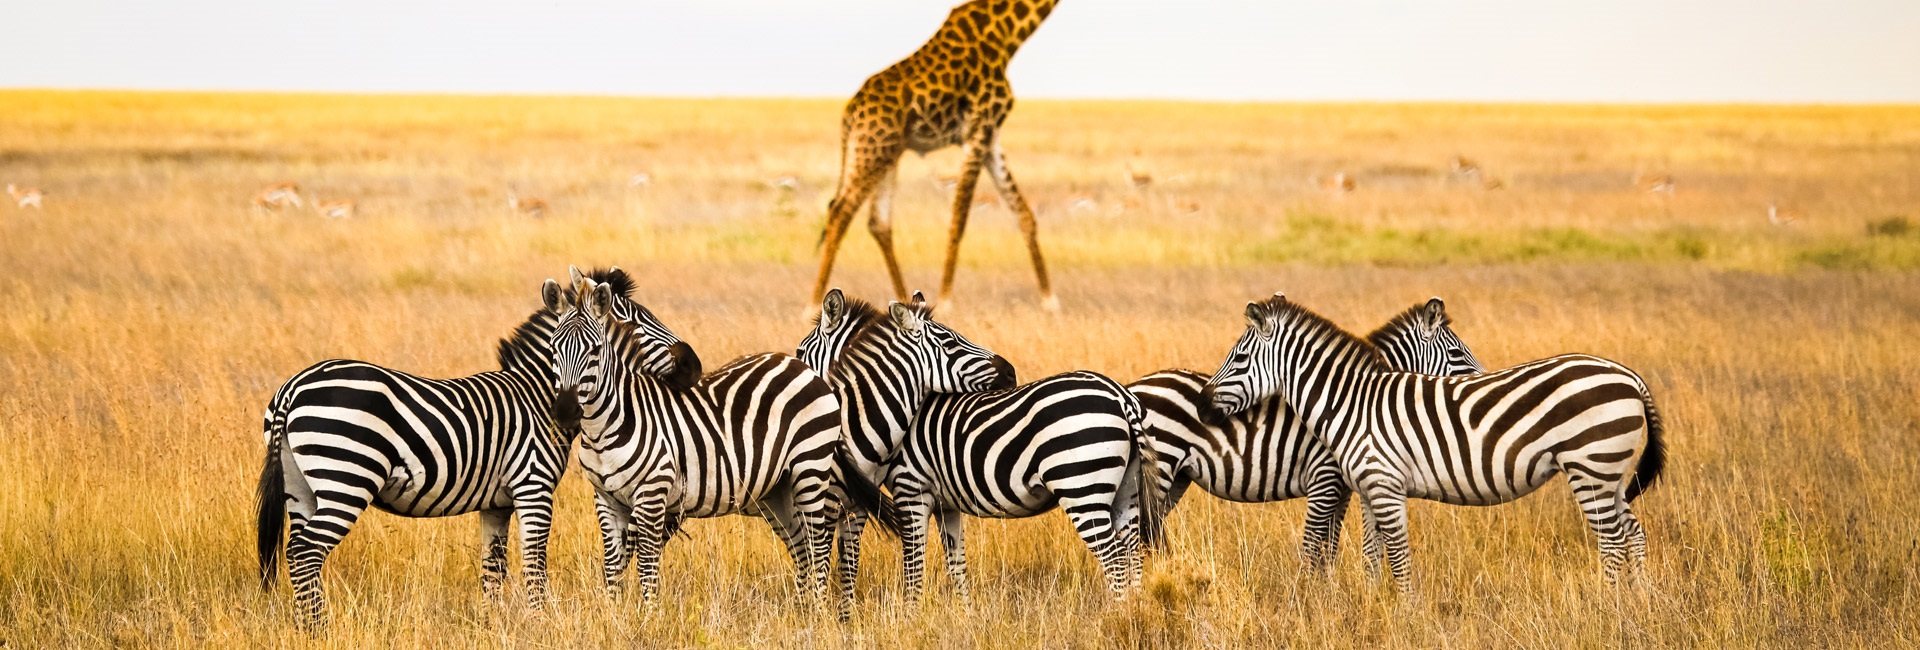 serengeti national park giraffe